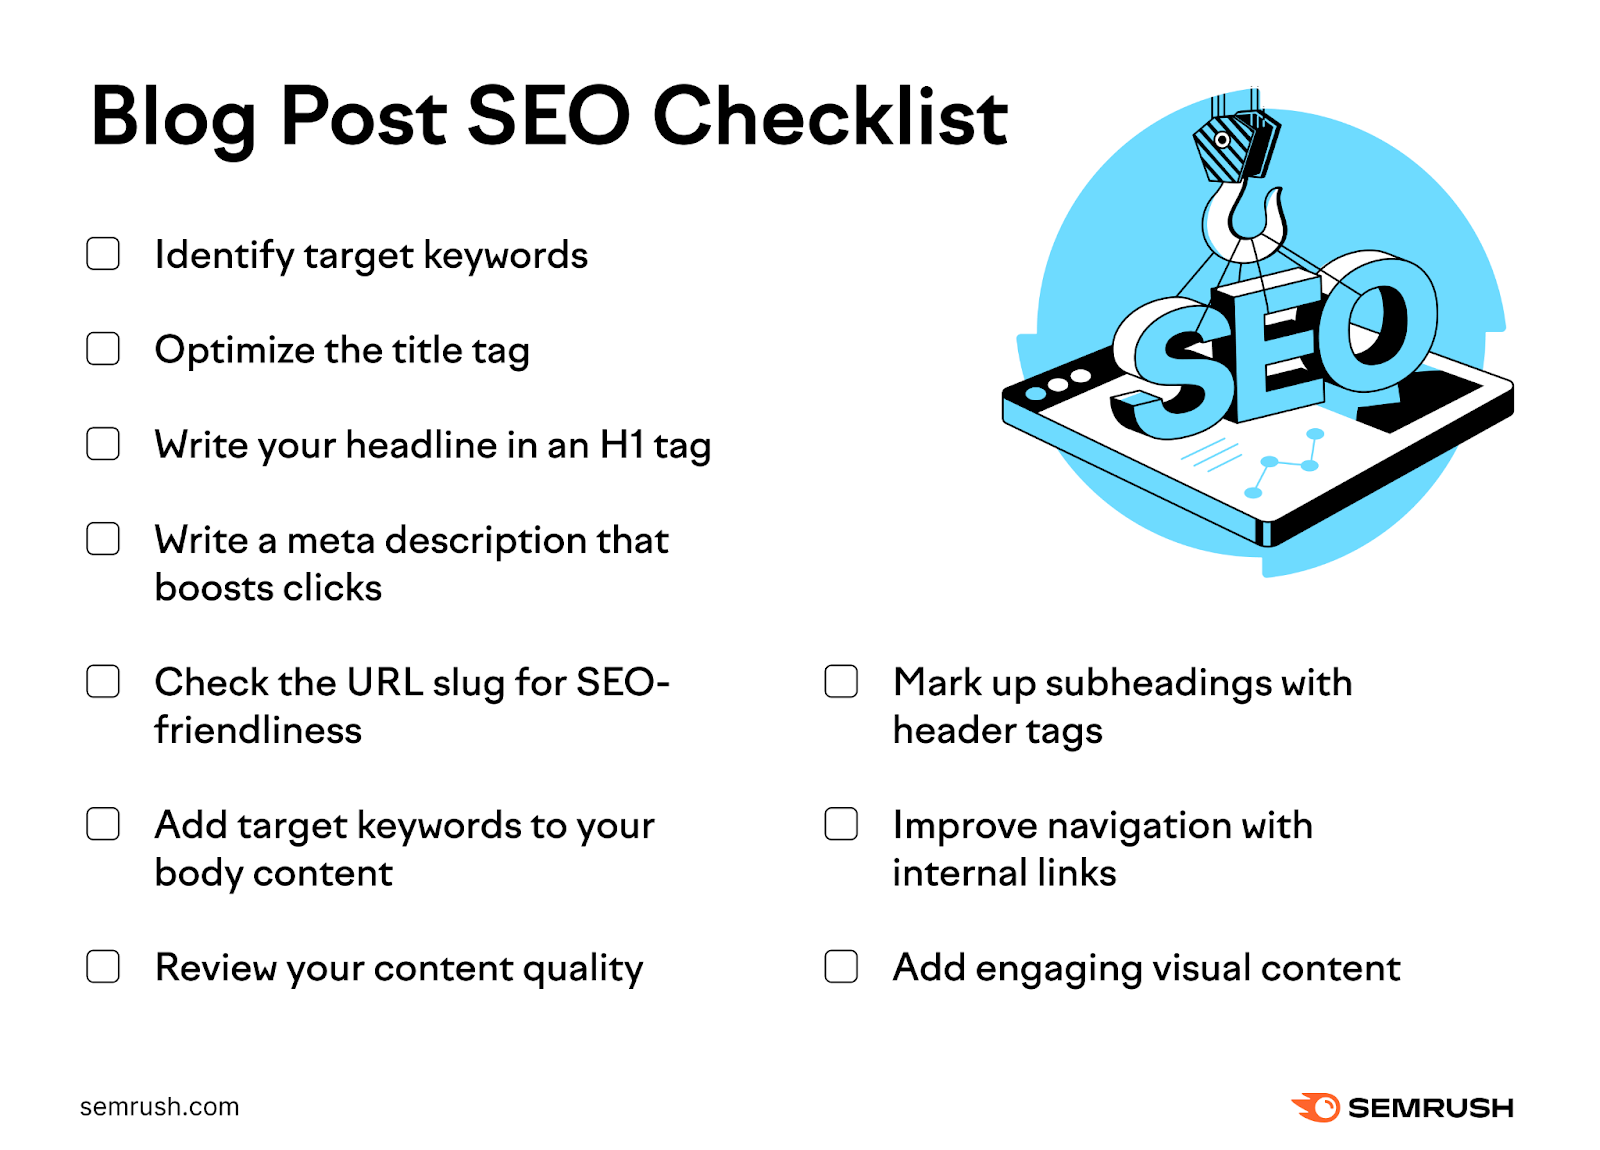 Blog post SEO checklist by Semrush